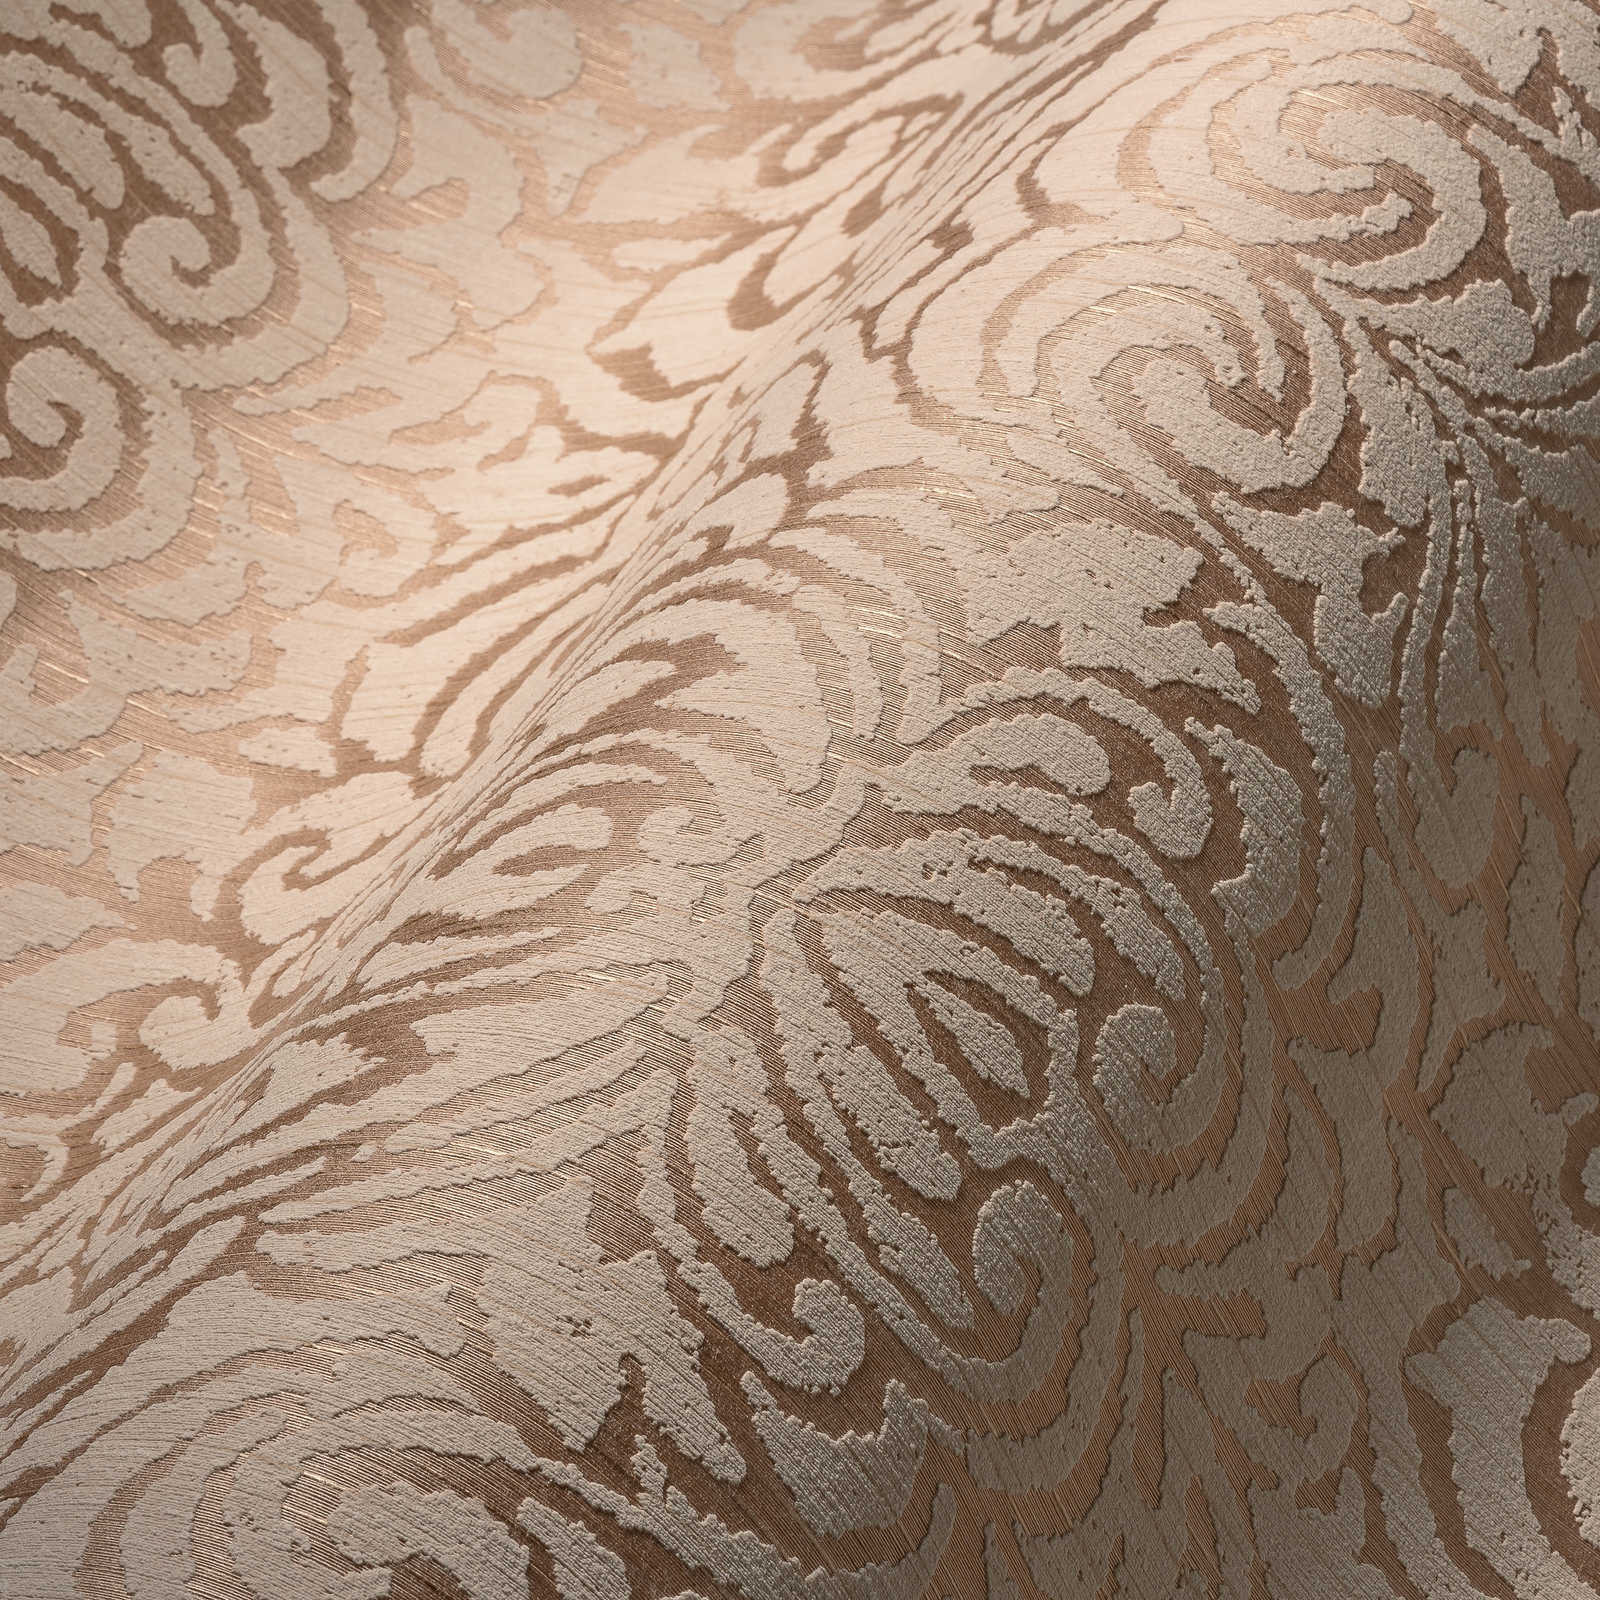             papel pintado adornos utilizados mirada con efecto de textura - beige
        